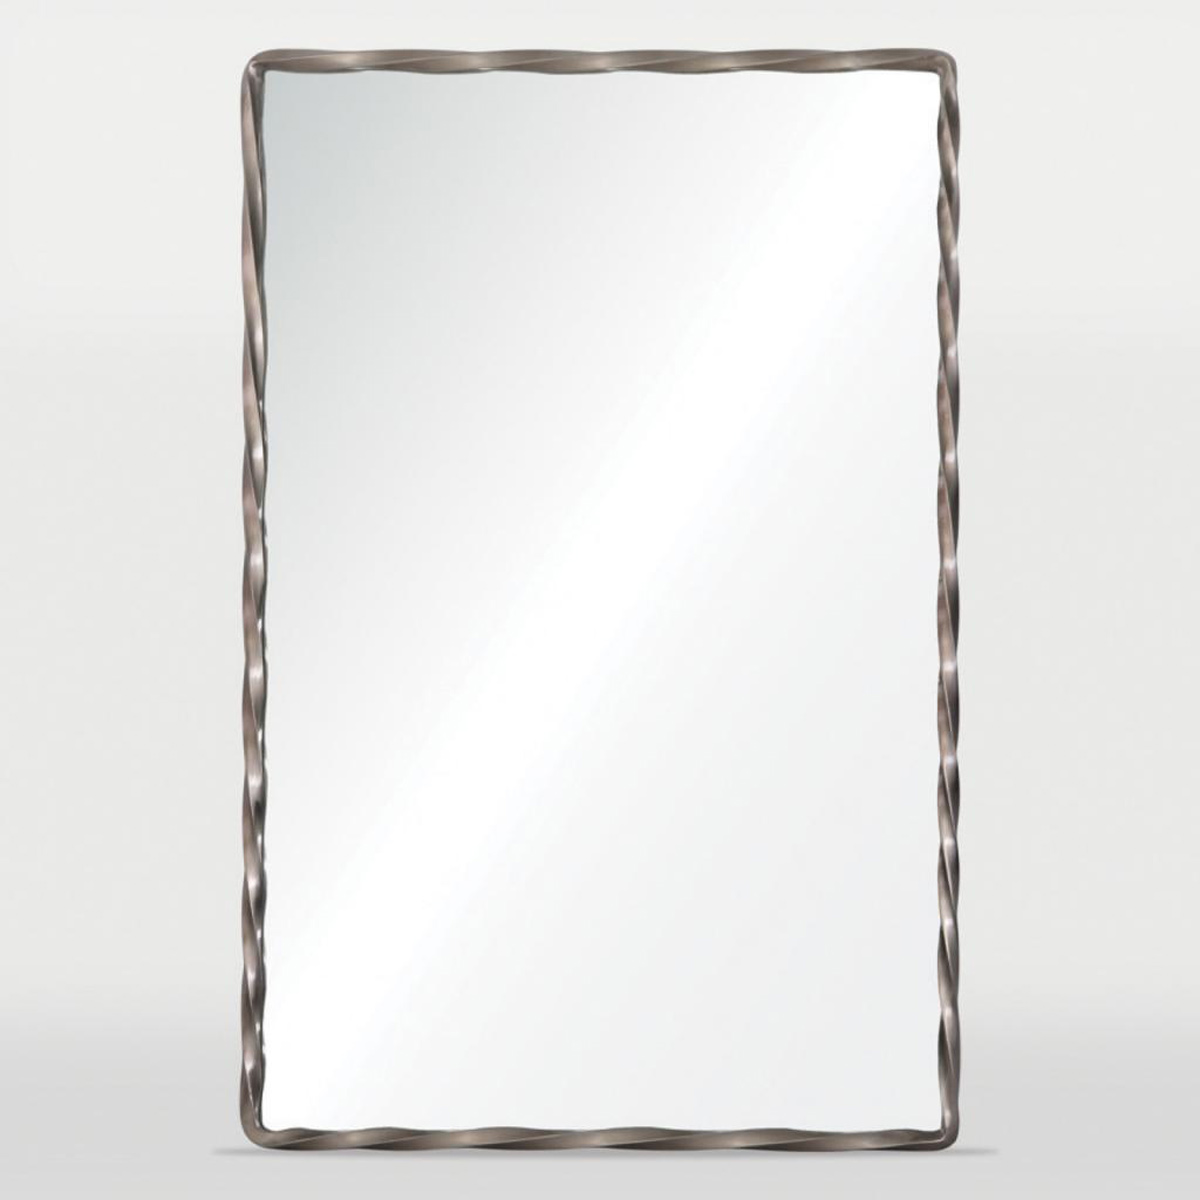 Ren-Wil Leadscrew Mirror - Brushed Nickel